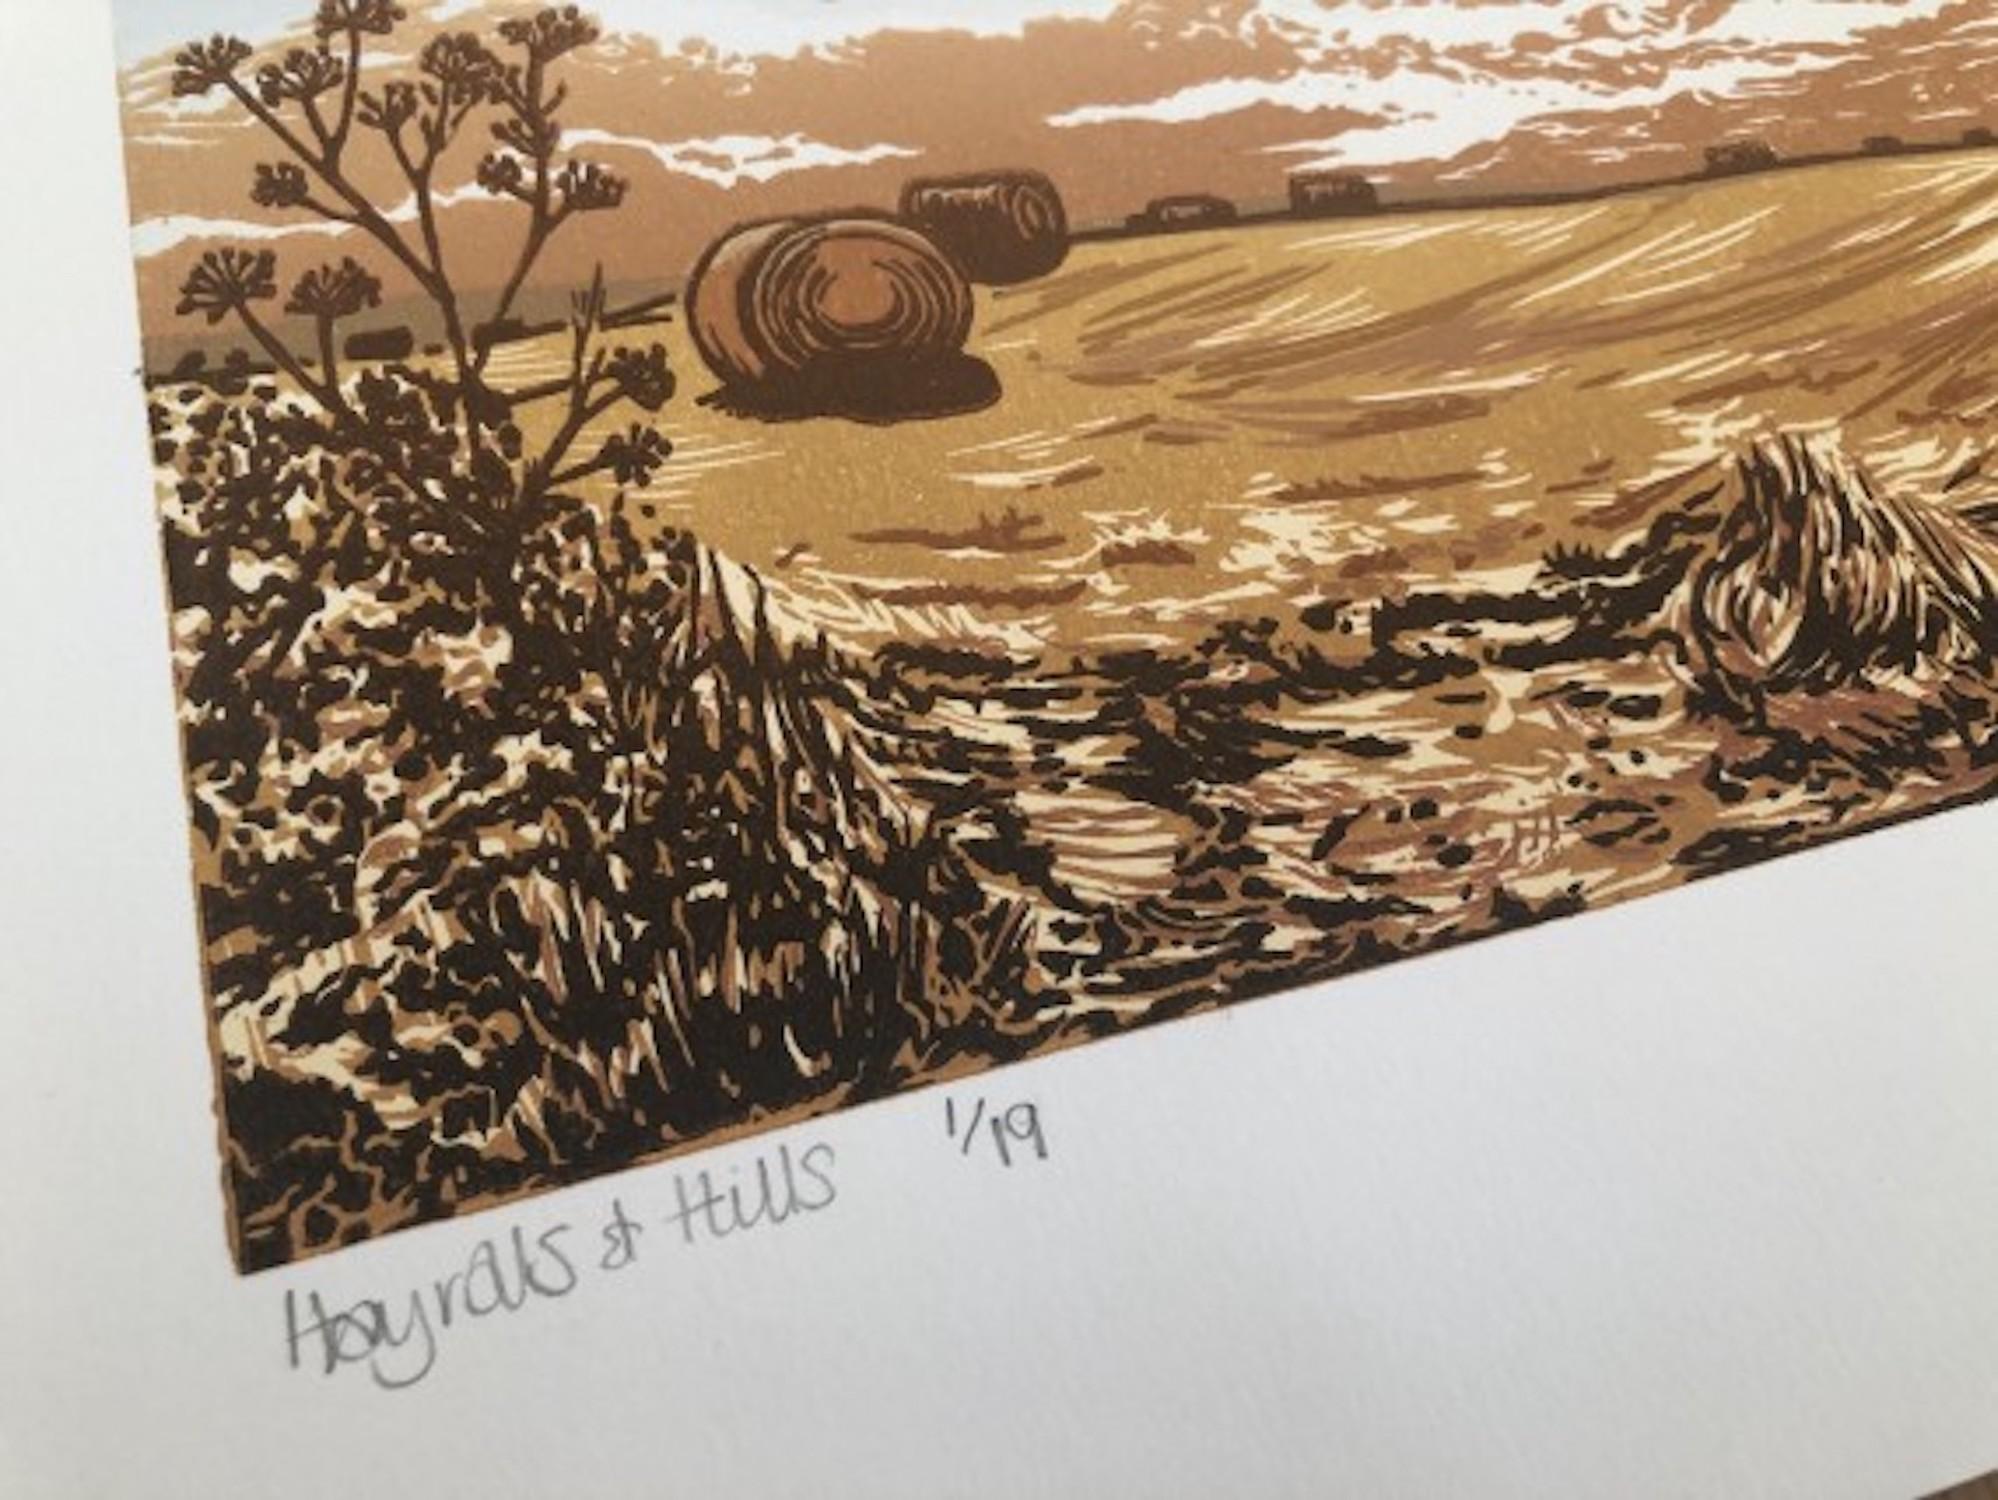 Hayrolls and Hills and Lammas Lands Diptych - Gray Landscape Print by Lisa Benson